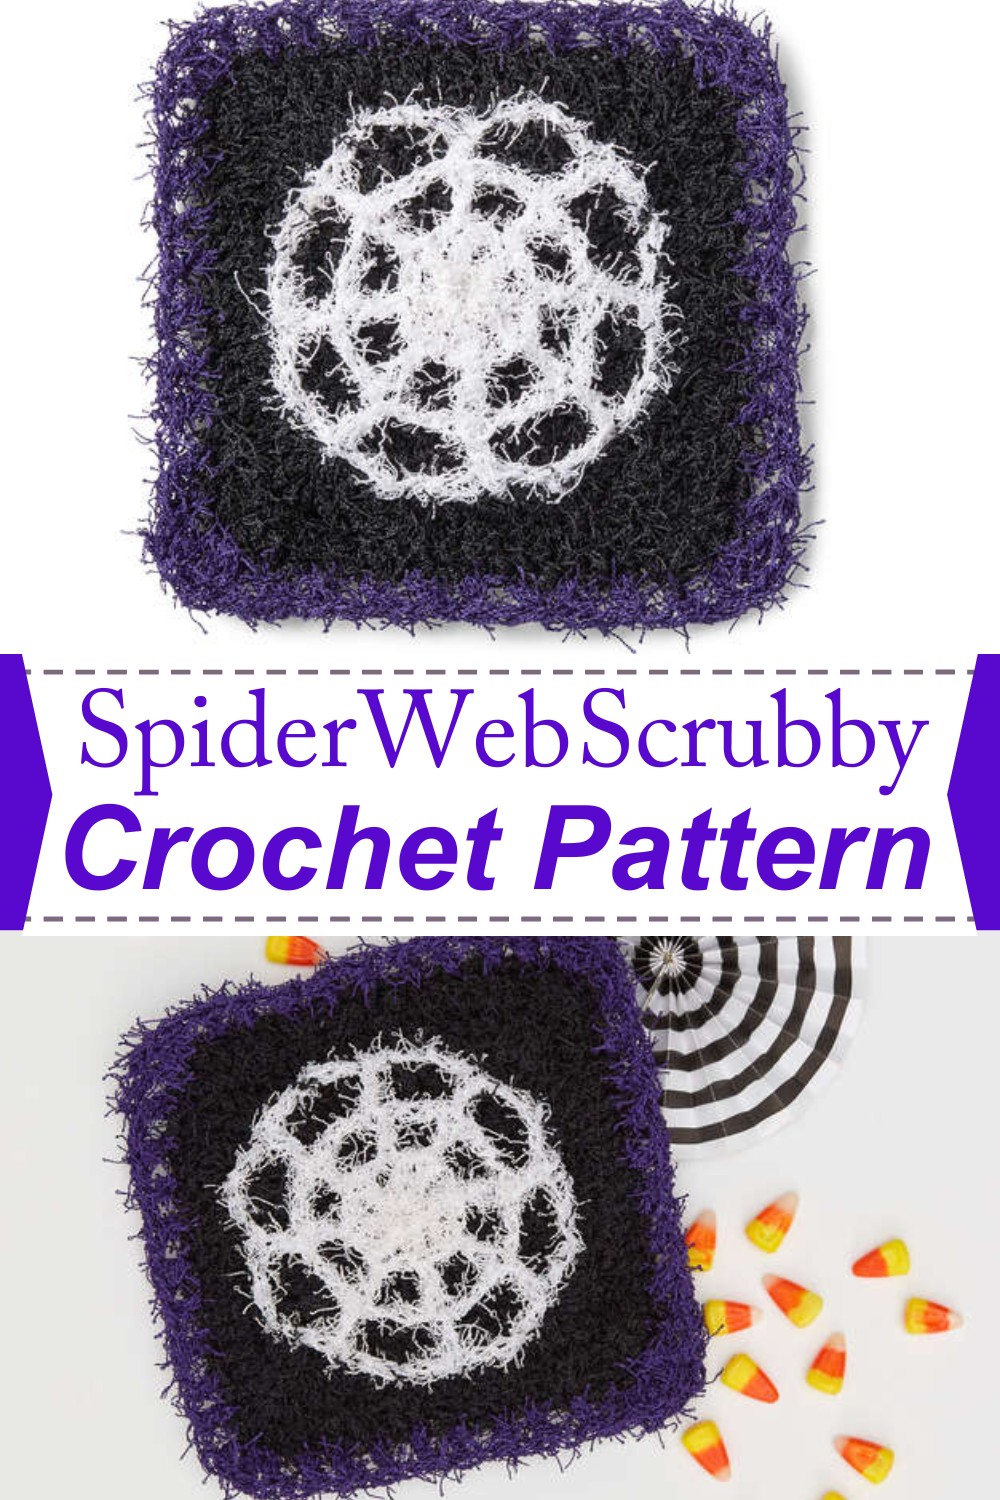 Spider Web Scrubby Crochet Pattern